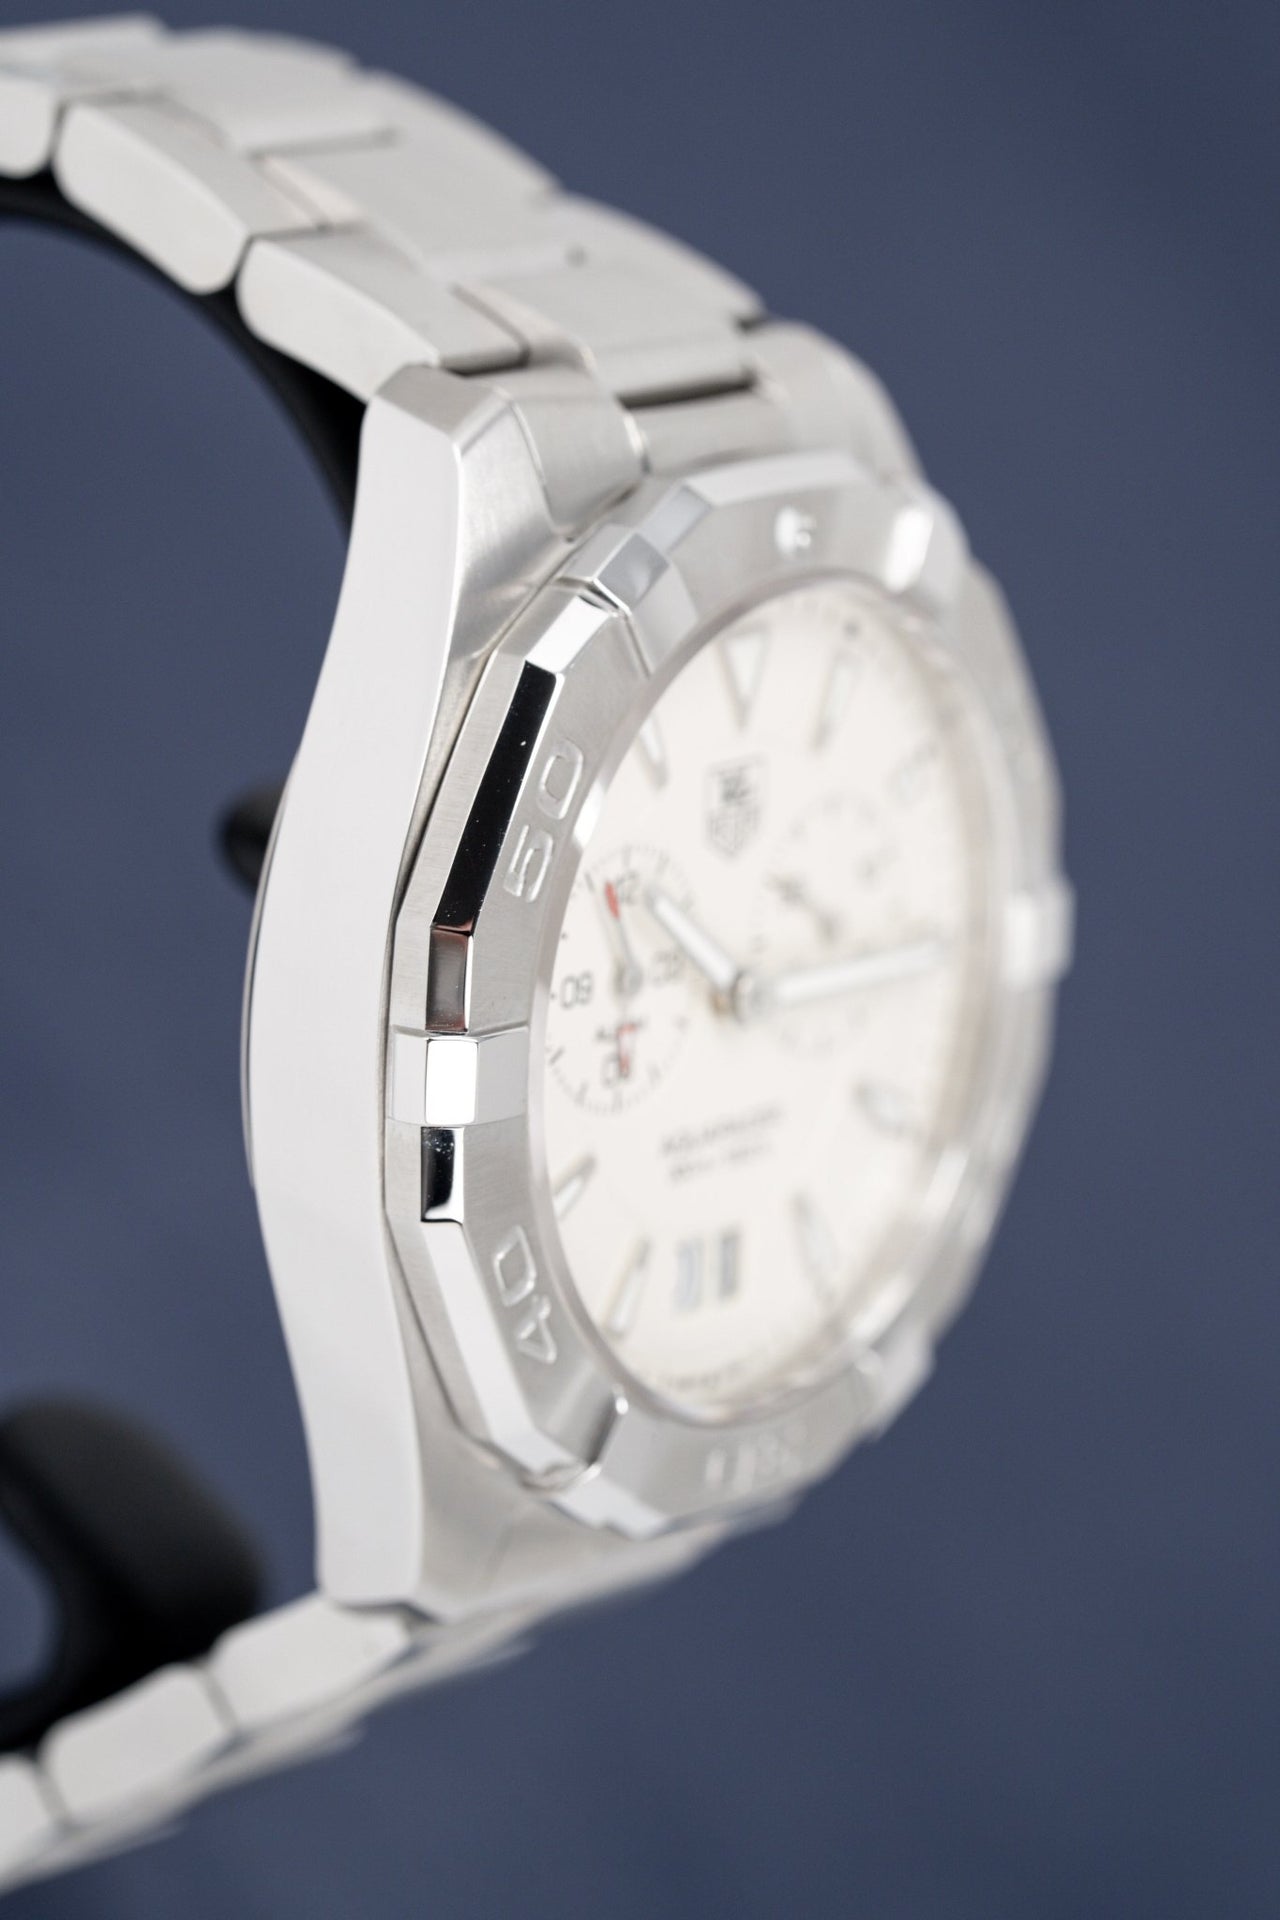 Tag Heuer Men's White Aquaracer Alarm Watch WAY111Y.BA0928 - Watches & Crystals